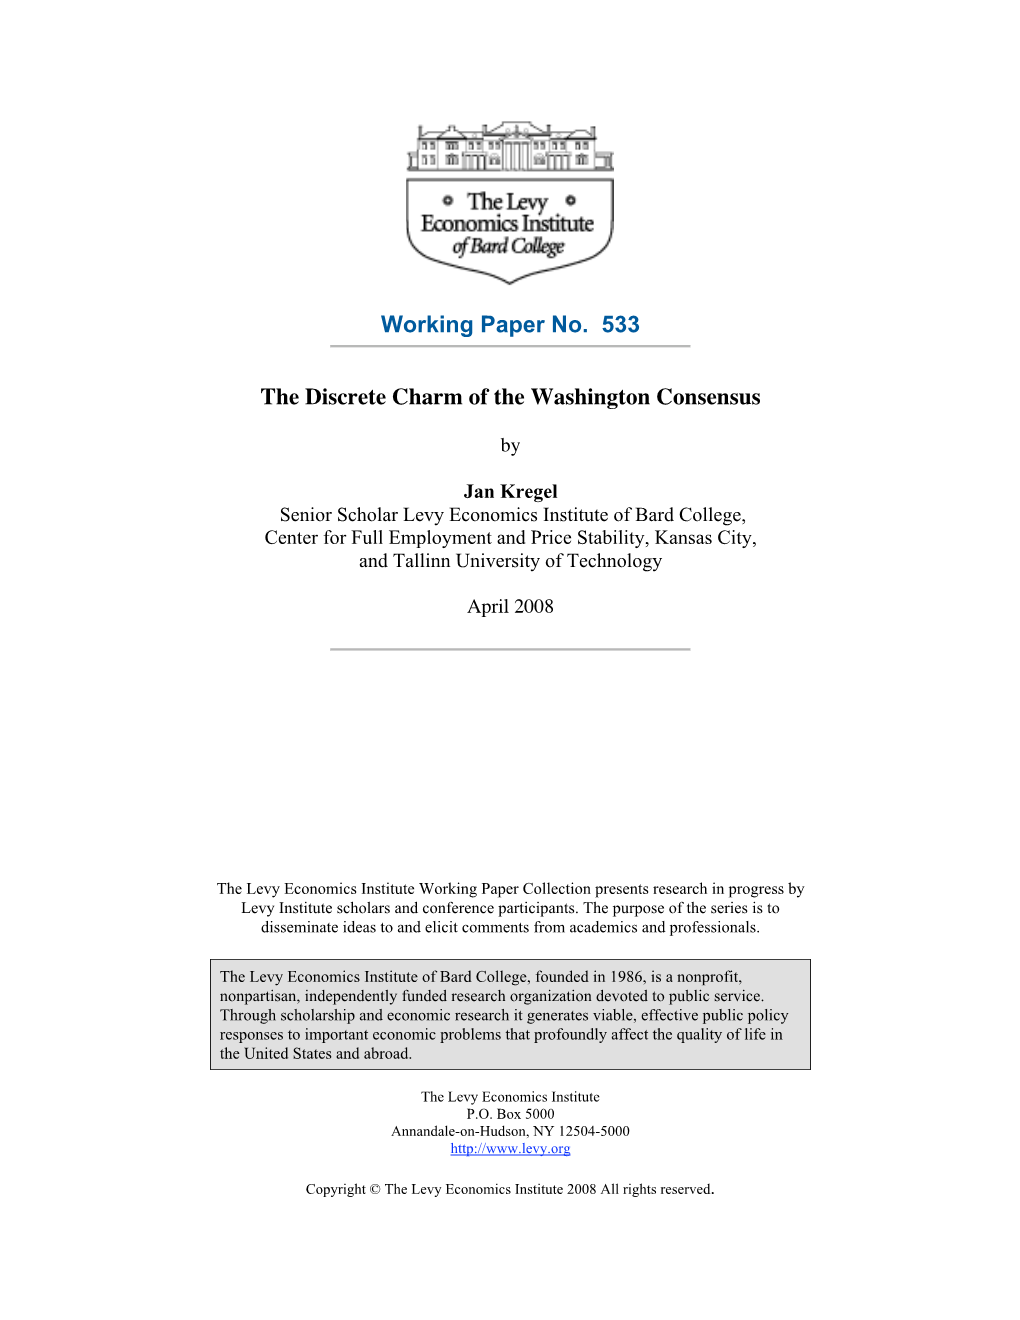 Working Paper No. 533 the Discrete Charm of the Washington Consensus